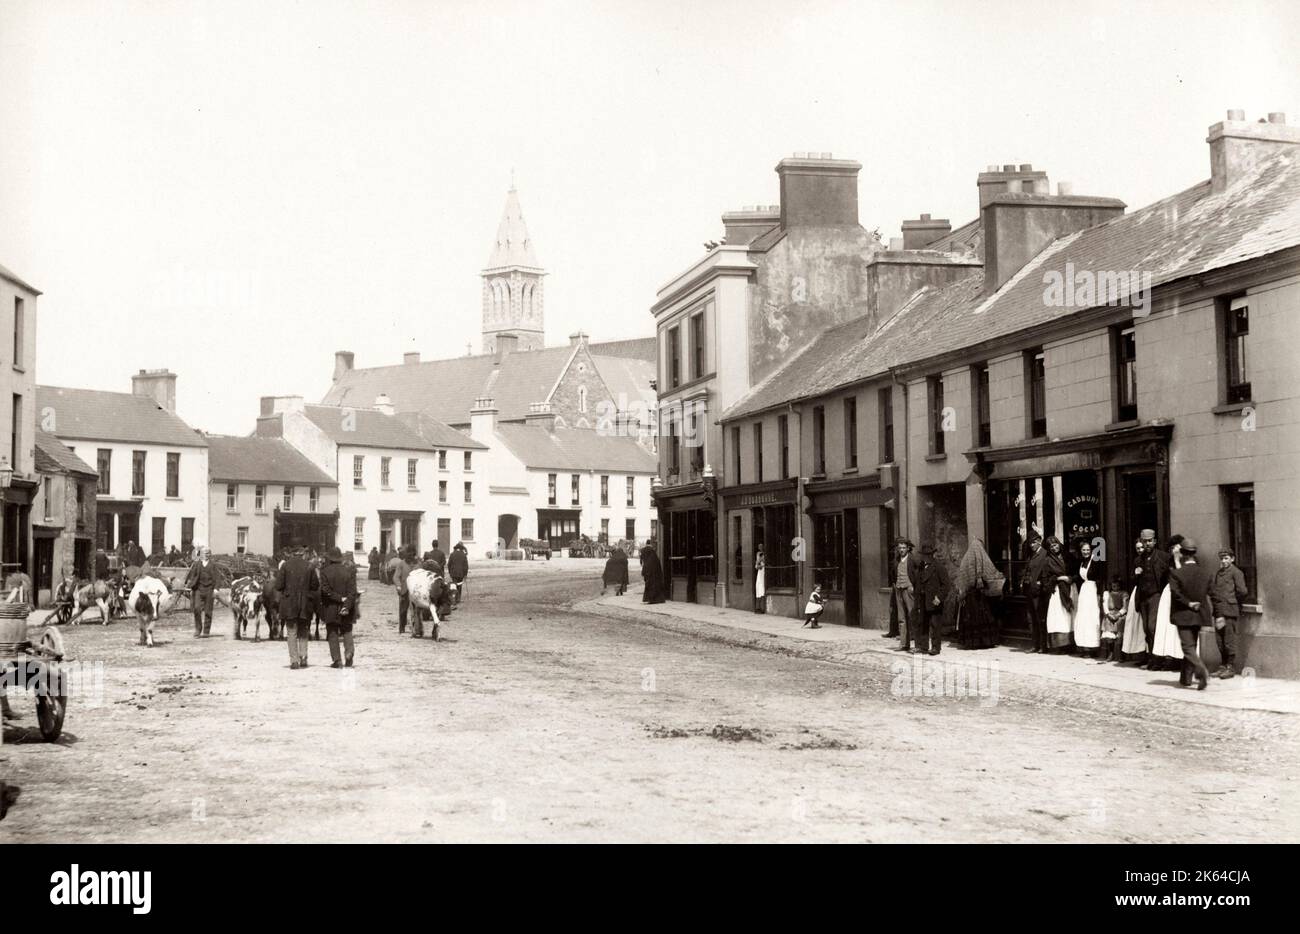 Vintage 19. Jahrhundert Fotografie - College Steet, Killarney, Irland, James Valentine Studio. Stockfoto